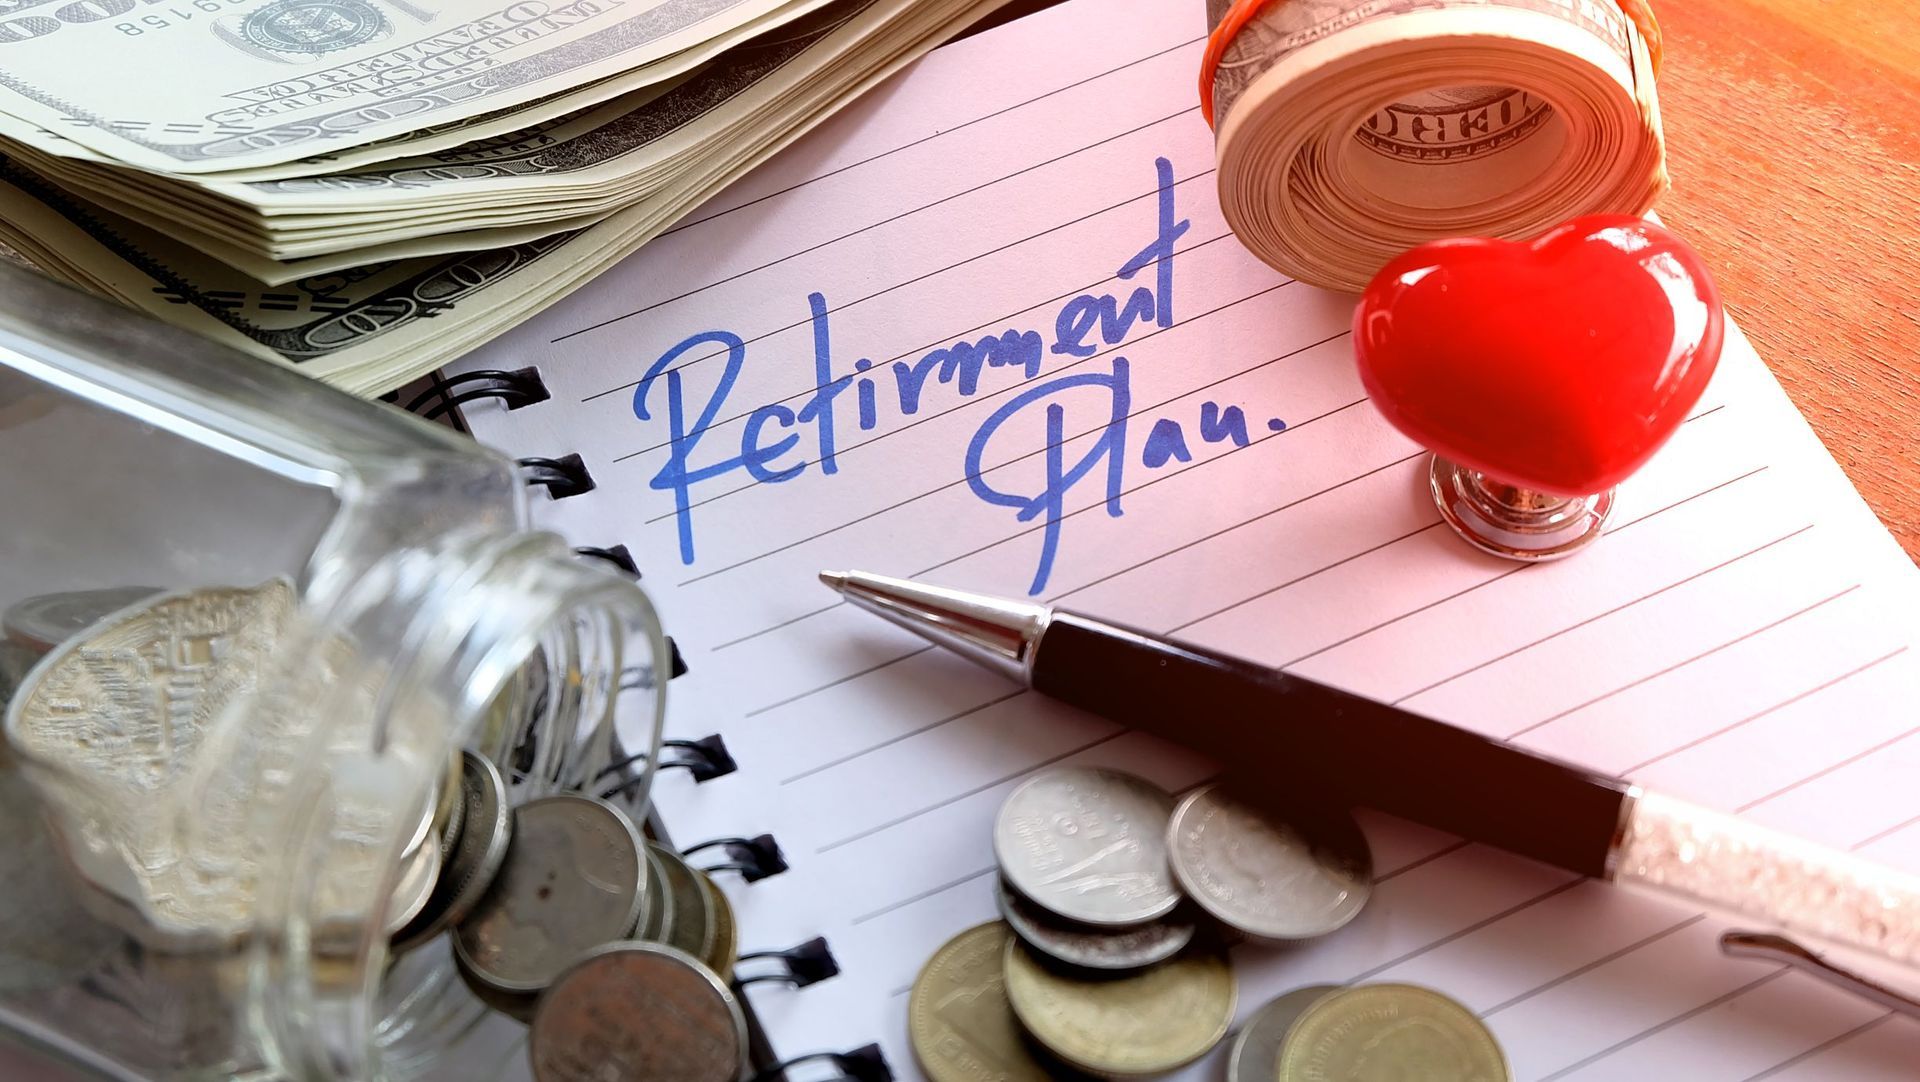 etirement plan savings money investment pension